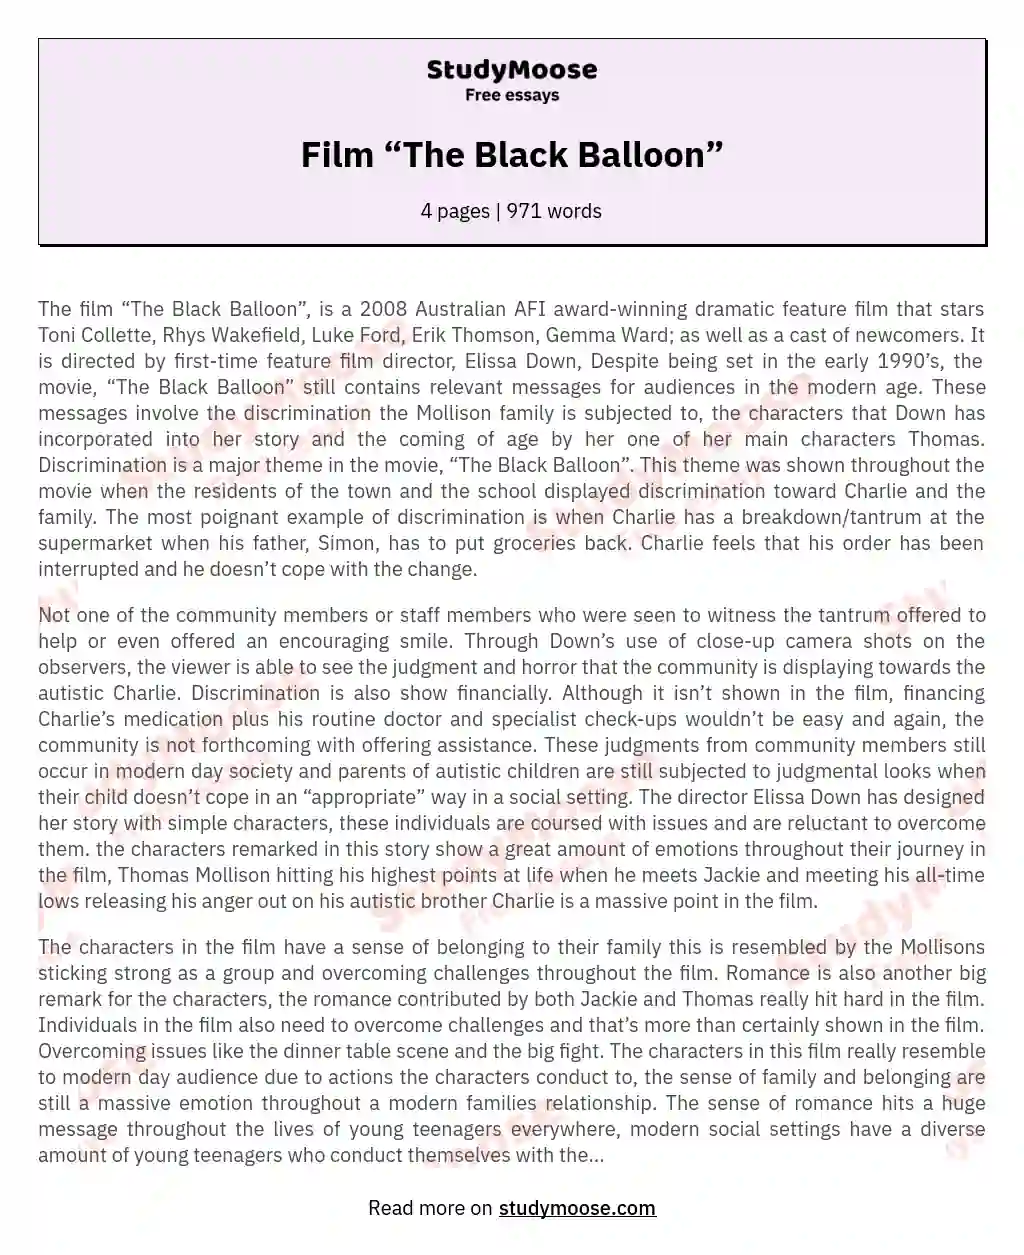 Film “The Black Balloon” essay